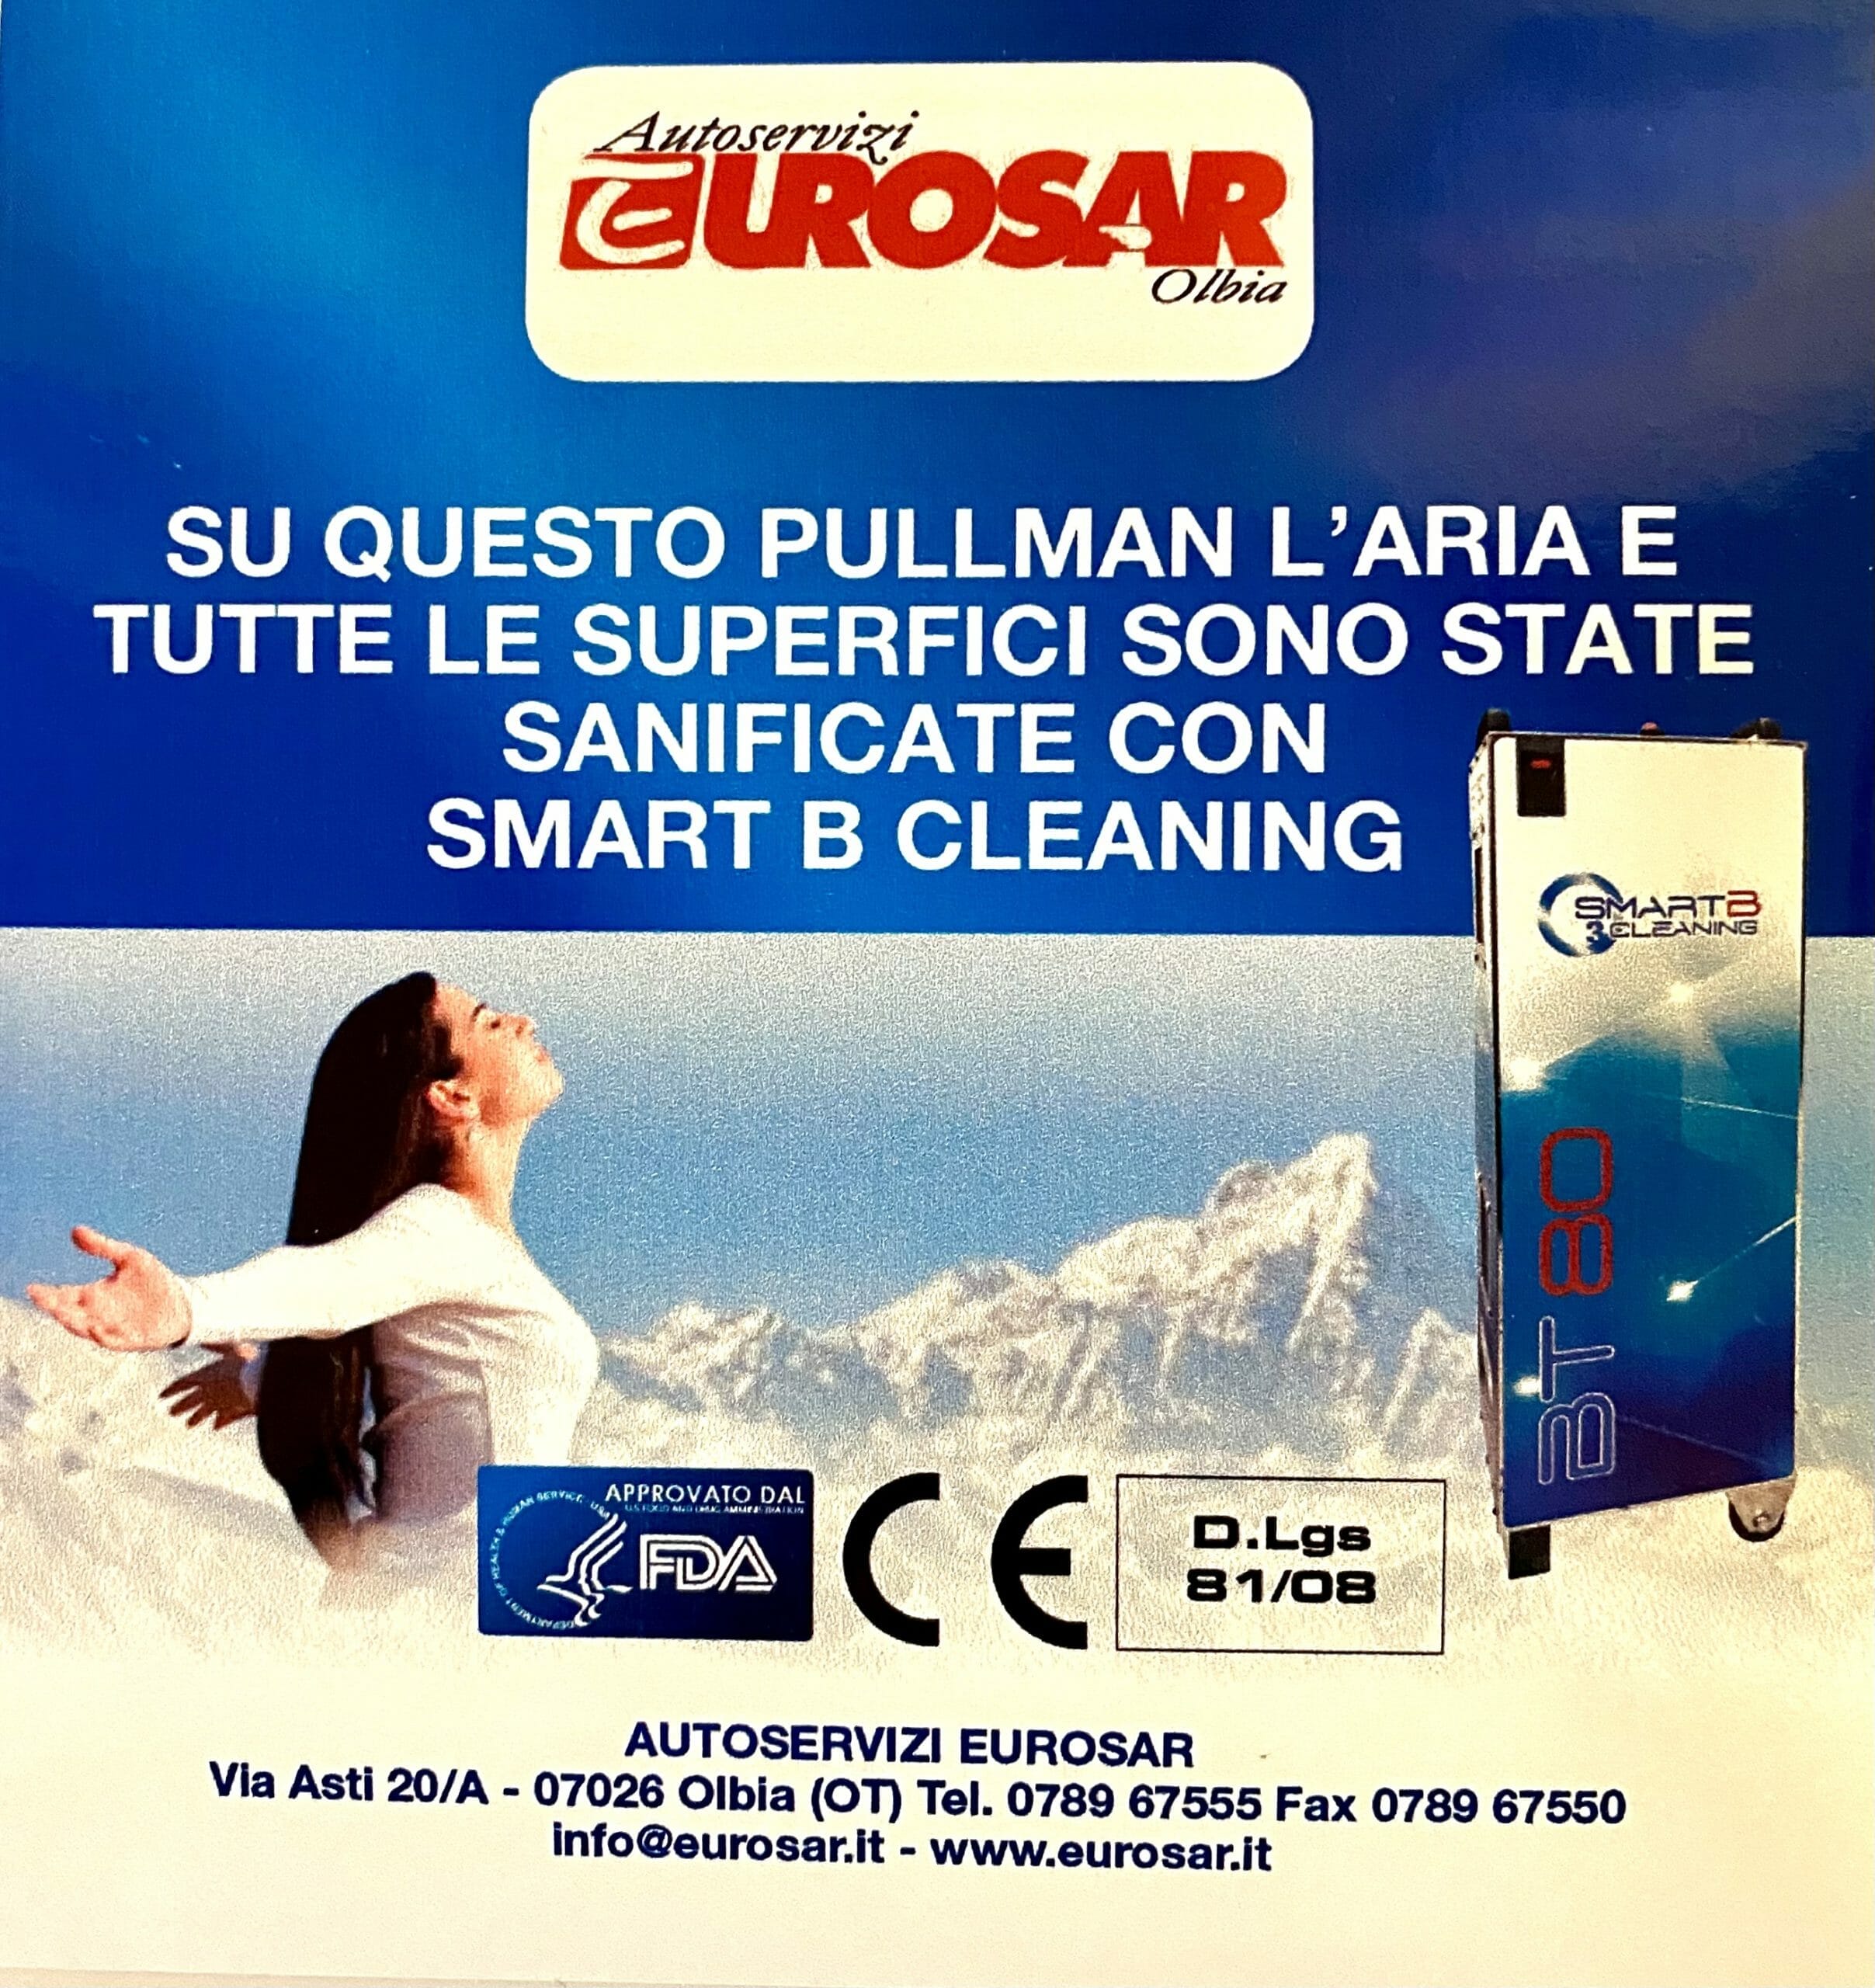 Sanificazione autobus Eurosar